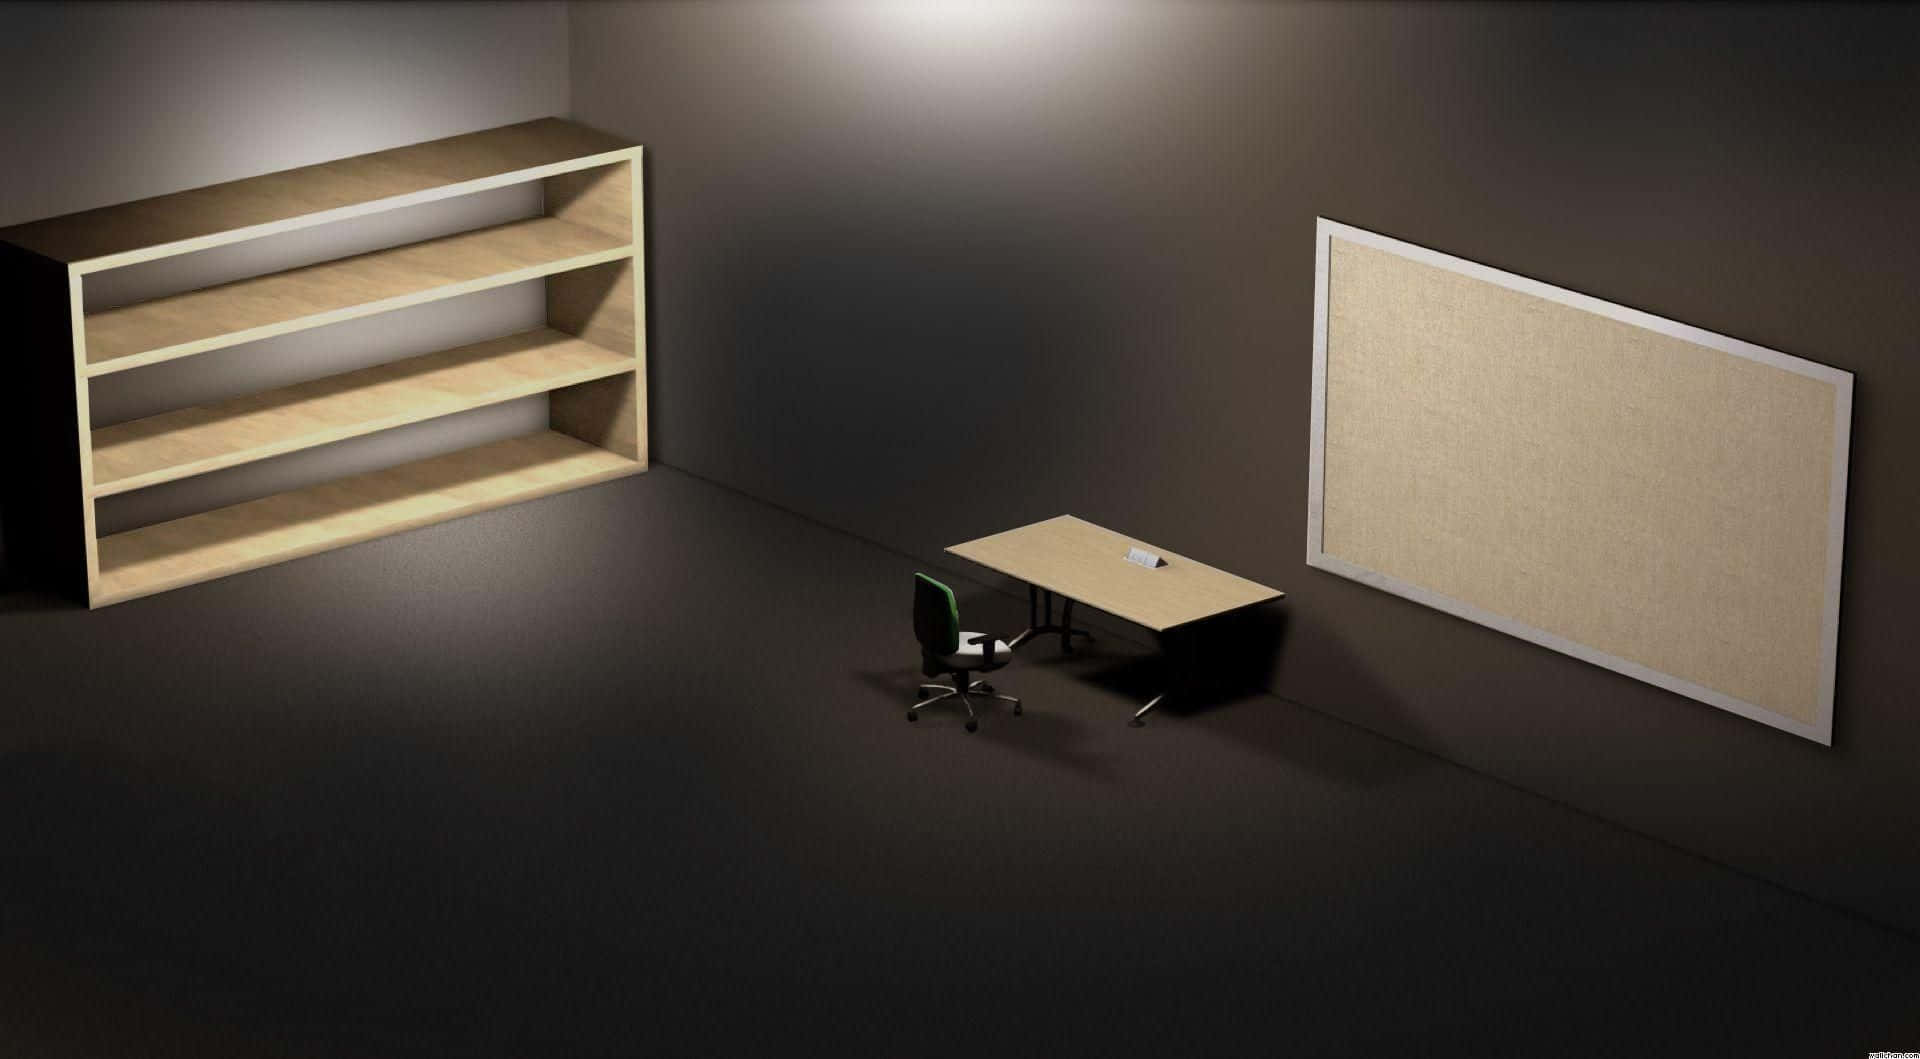 Get organized using this stylish Shelf